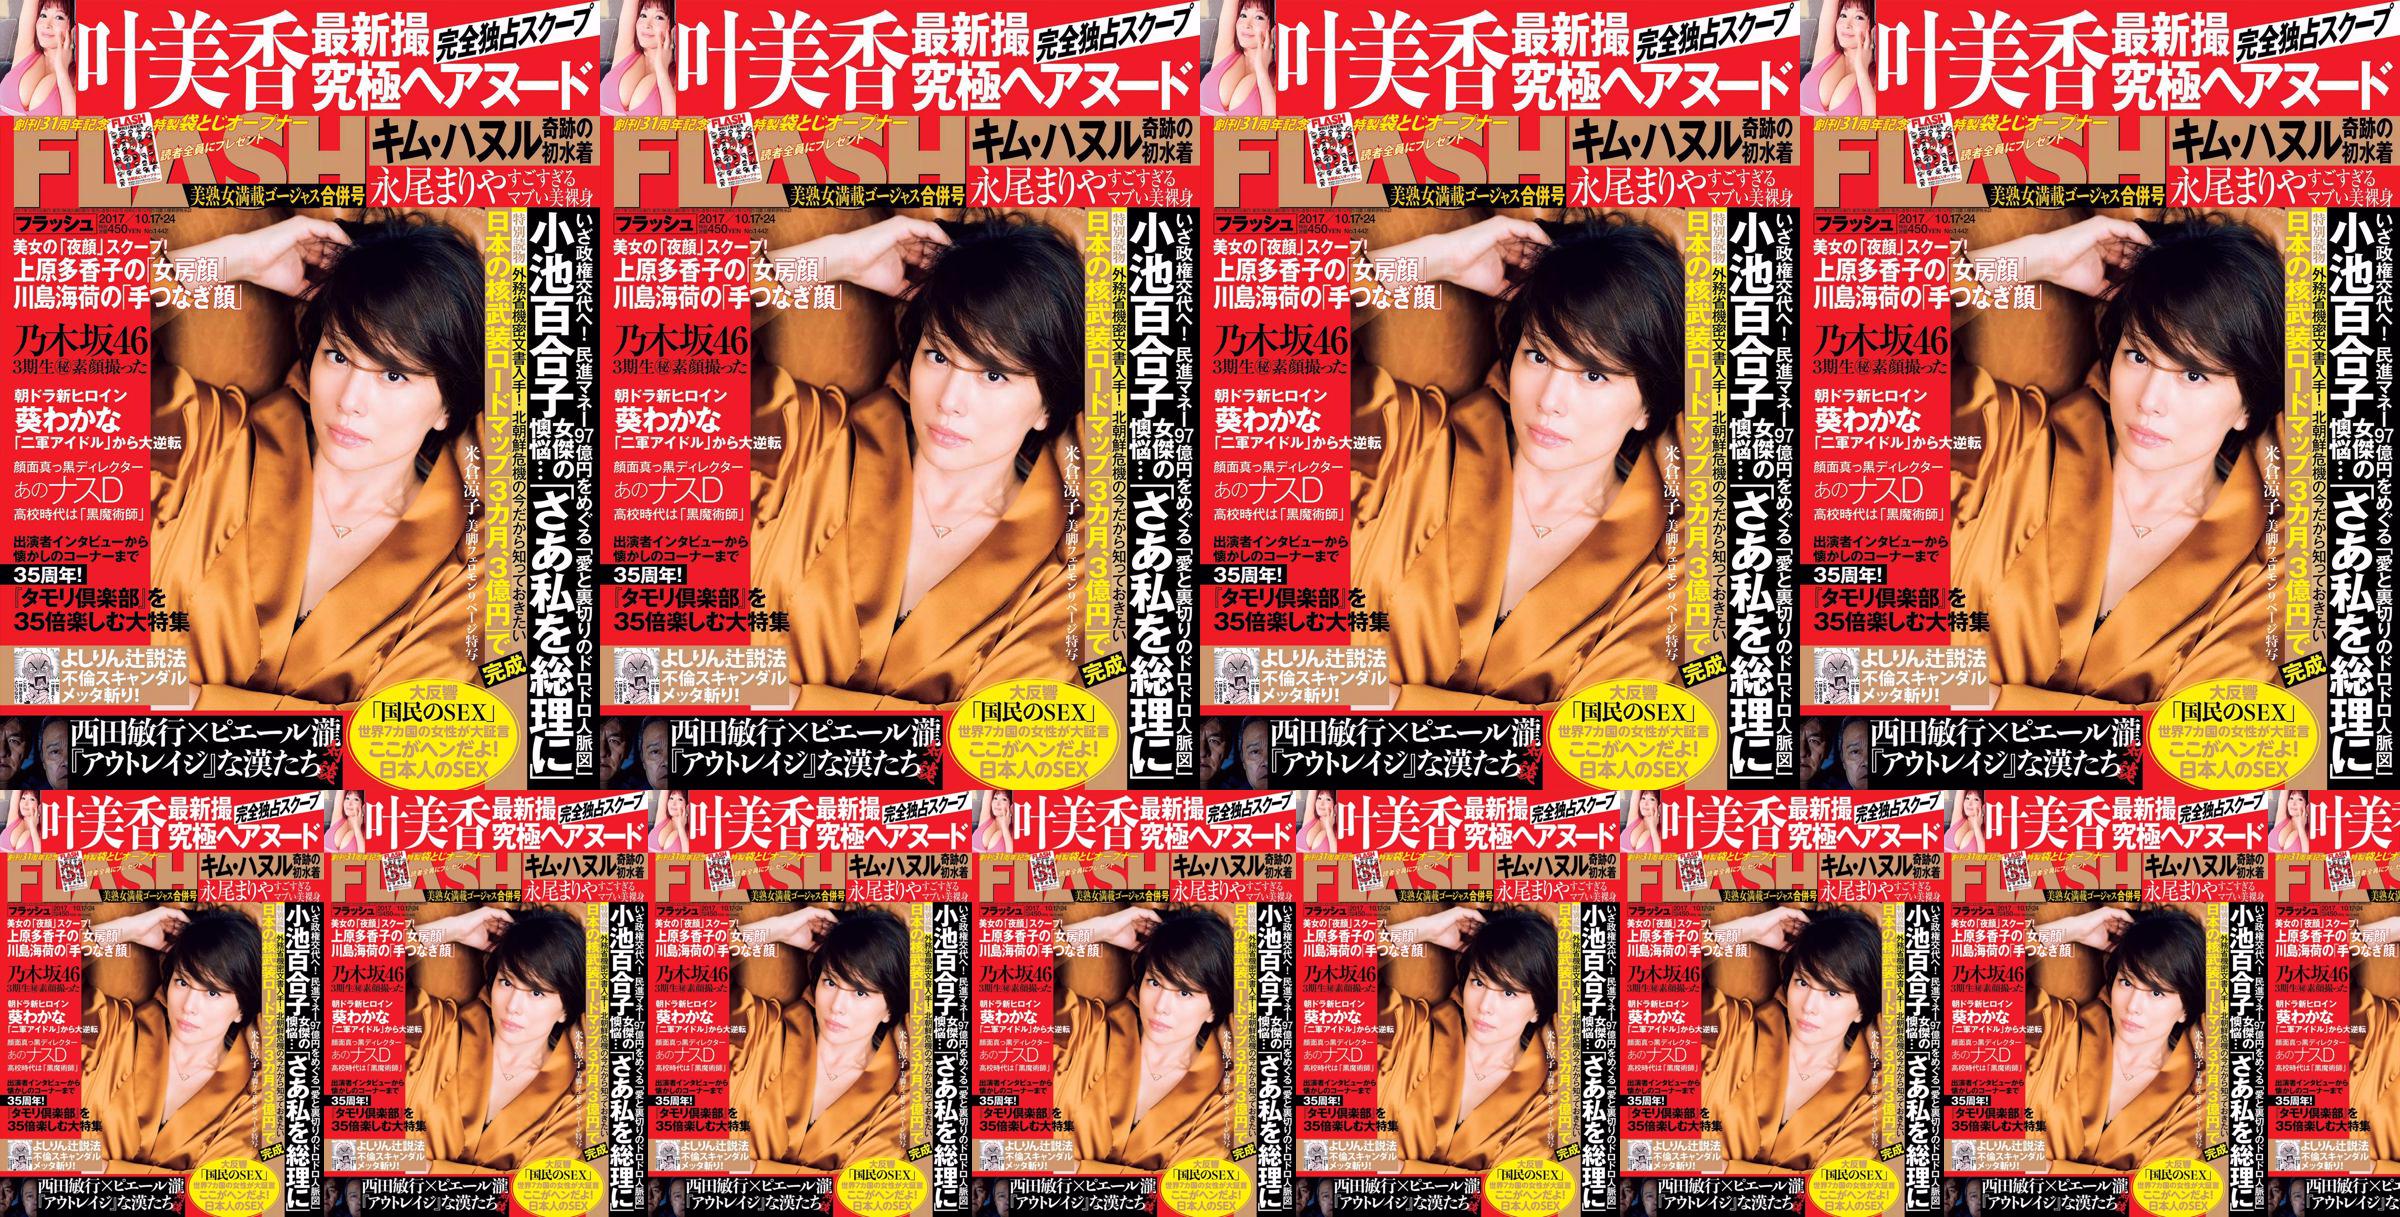 [FLASH] Yonekura Ryoko Ye Meixiang Tachibana Flower Rin Nagao Rika 2017.10.17-24 Photo Magazine No.13d52b Página 1